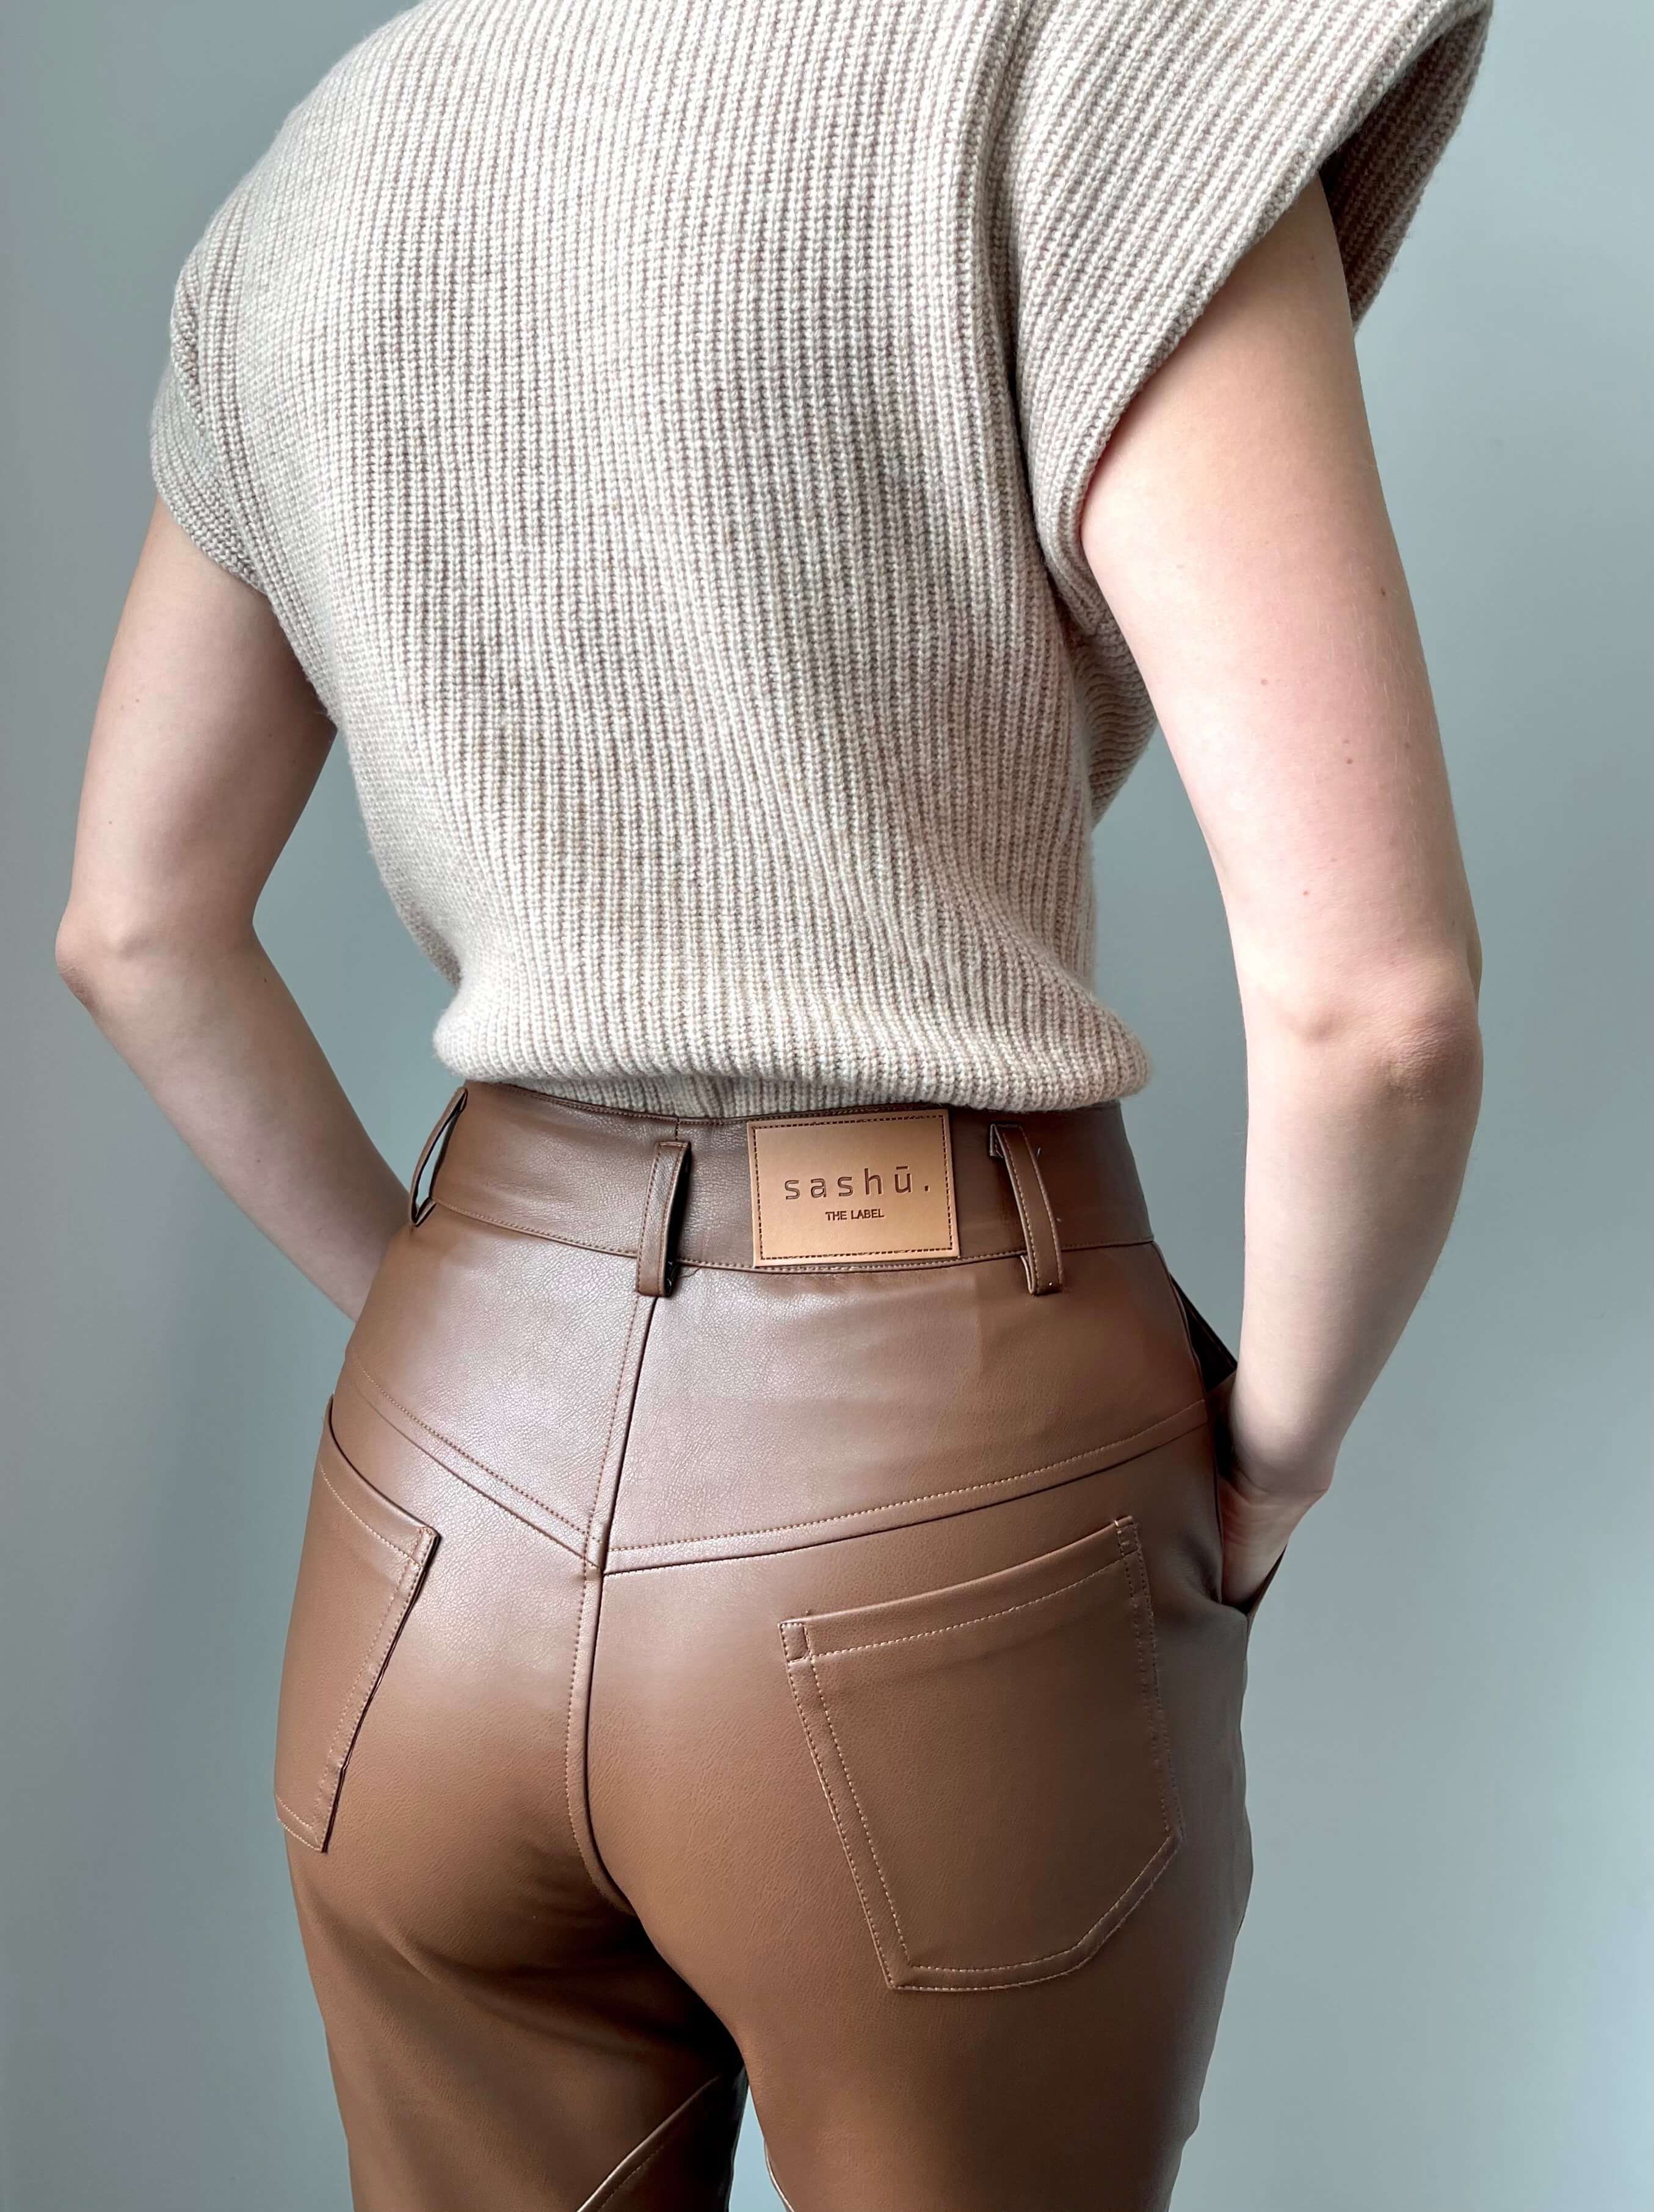 Zara Faux Leather Pants High Waist Extra Long Zip Split Hem NWT Size S   eBay